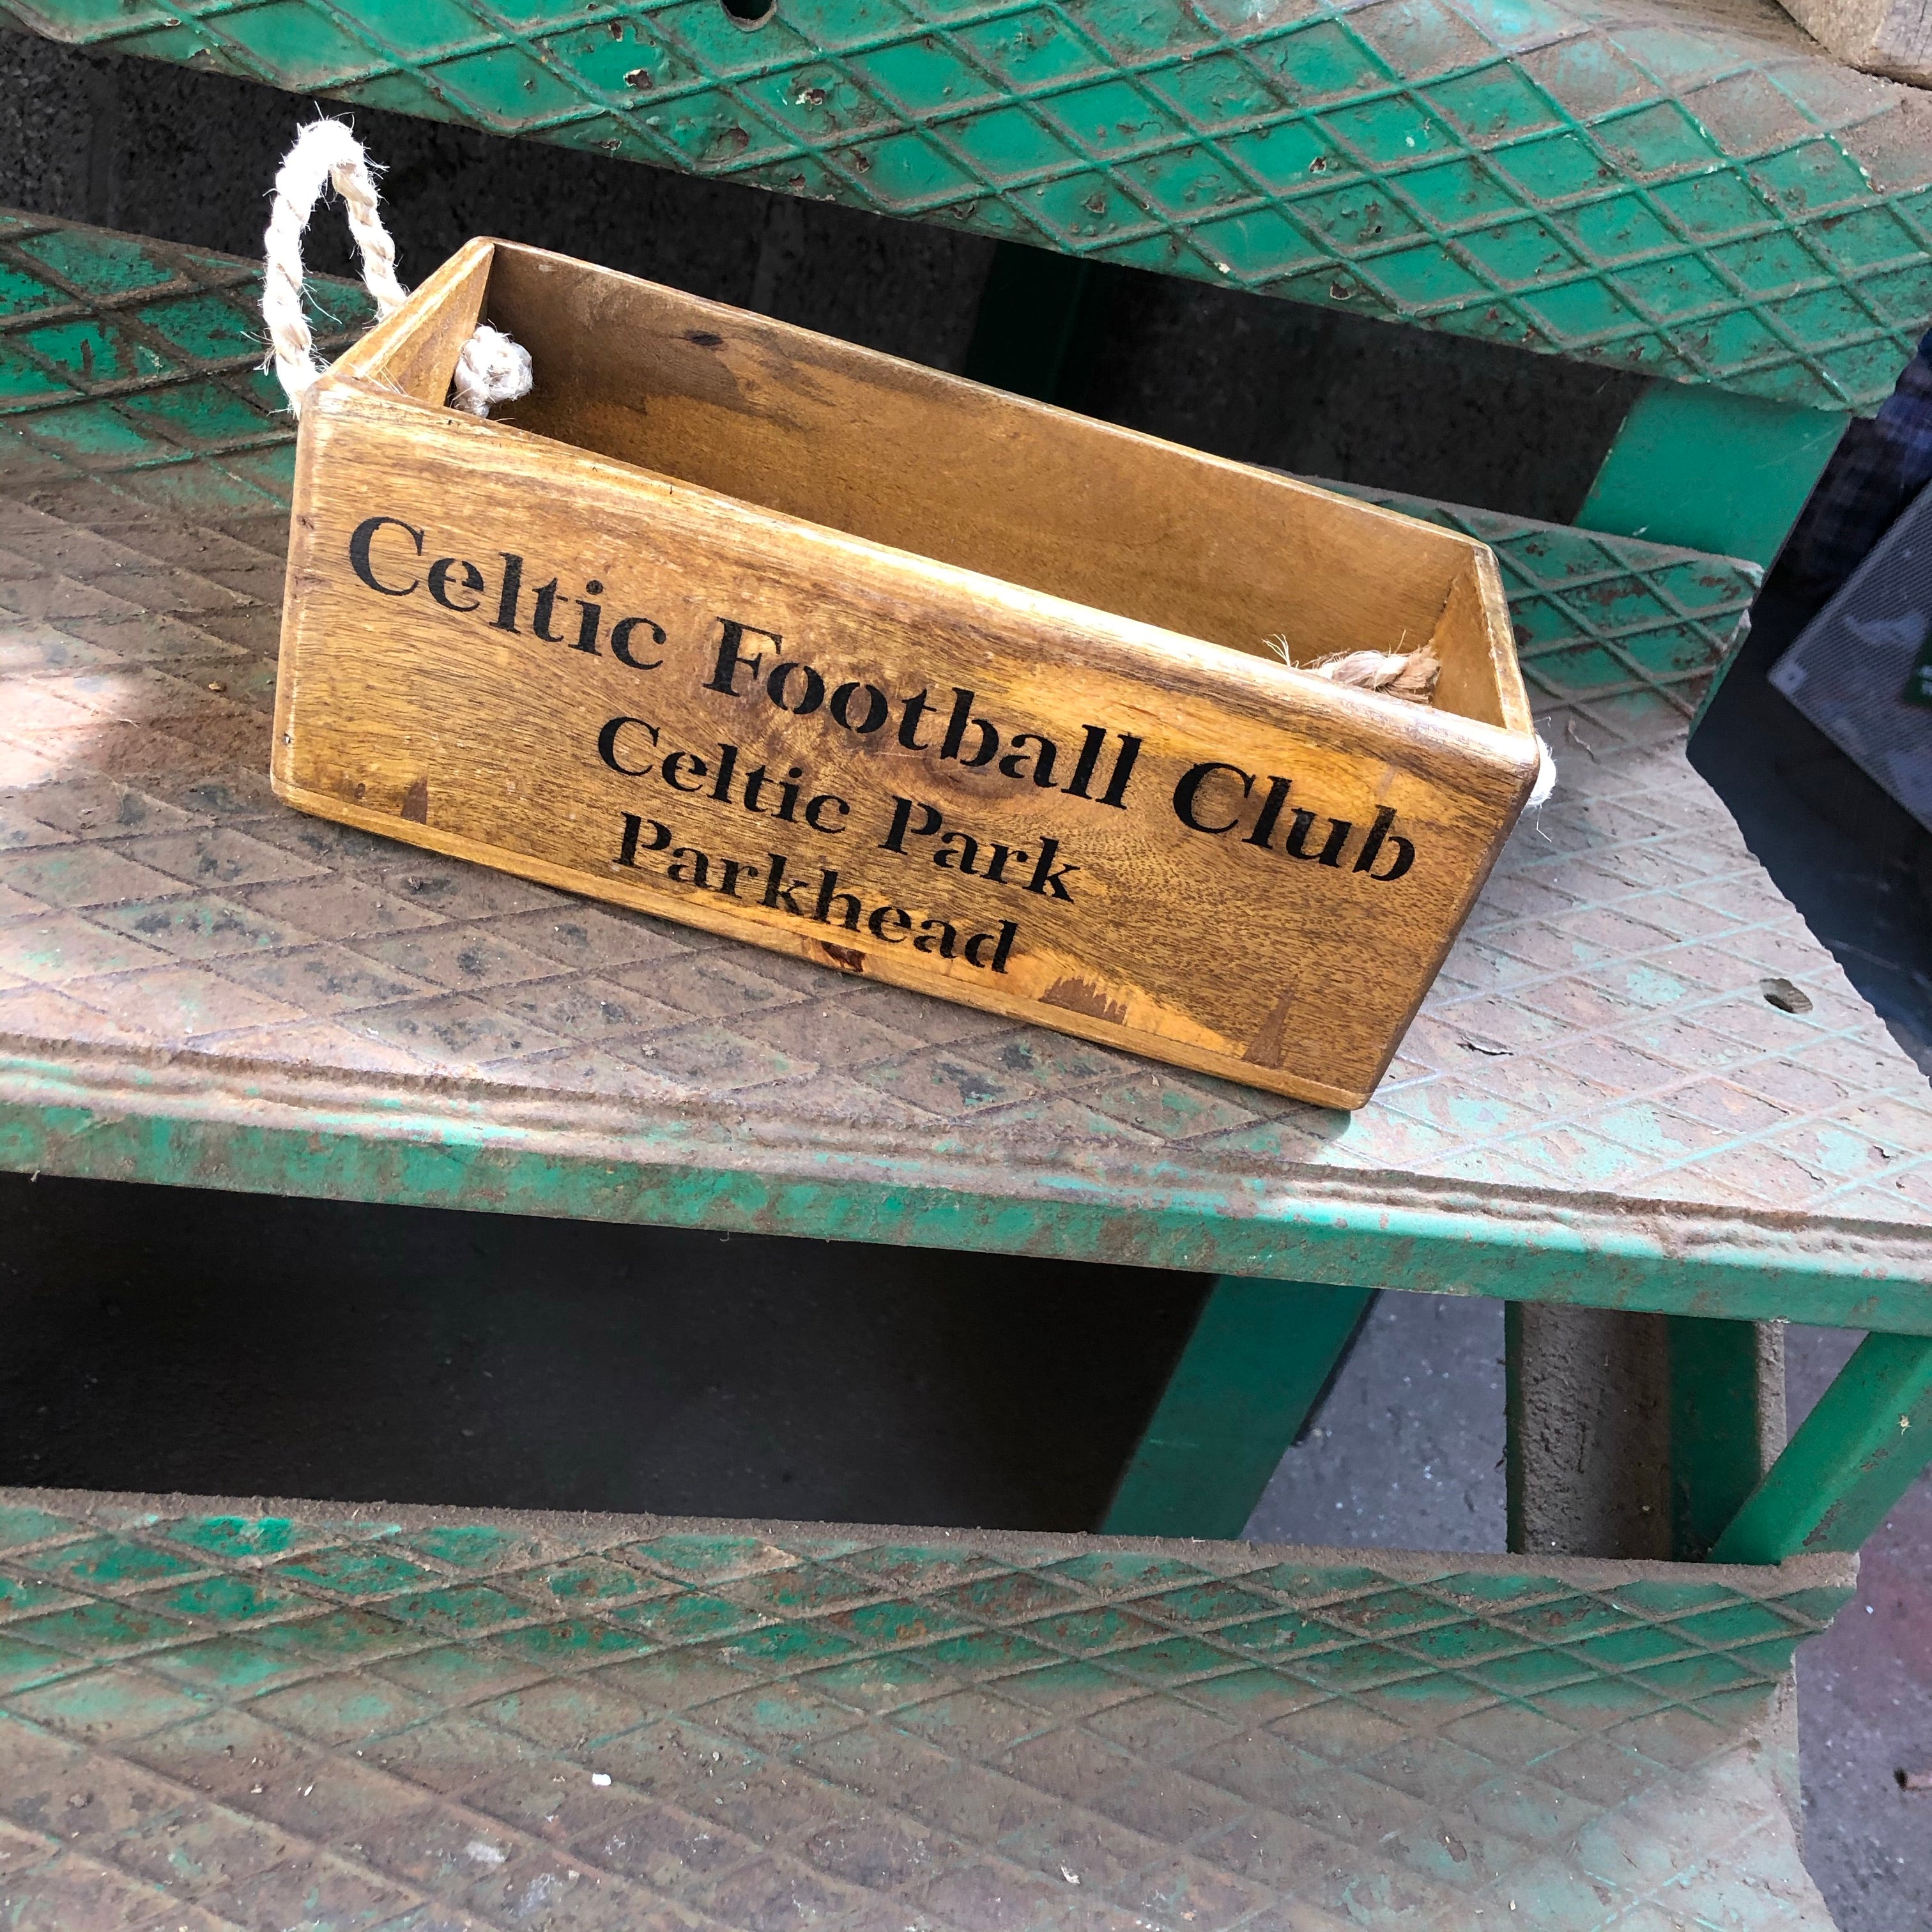 Celtic football club wooden box - SALE